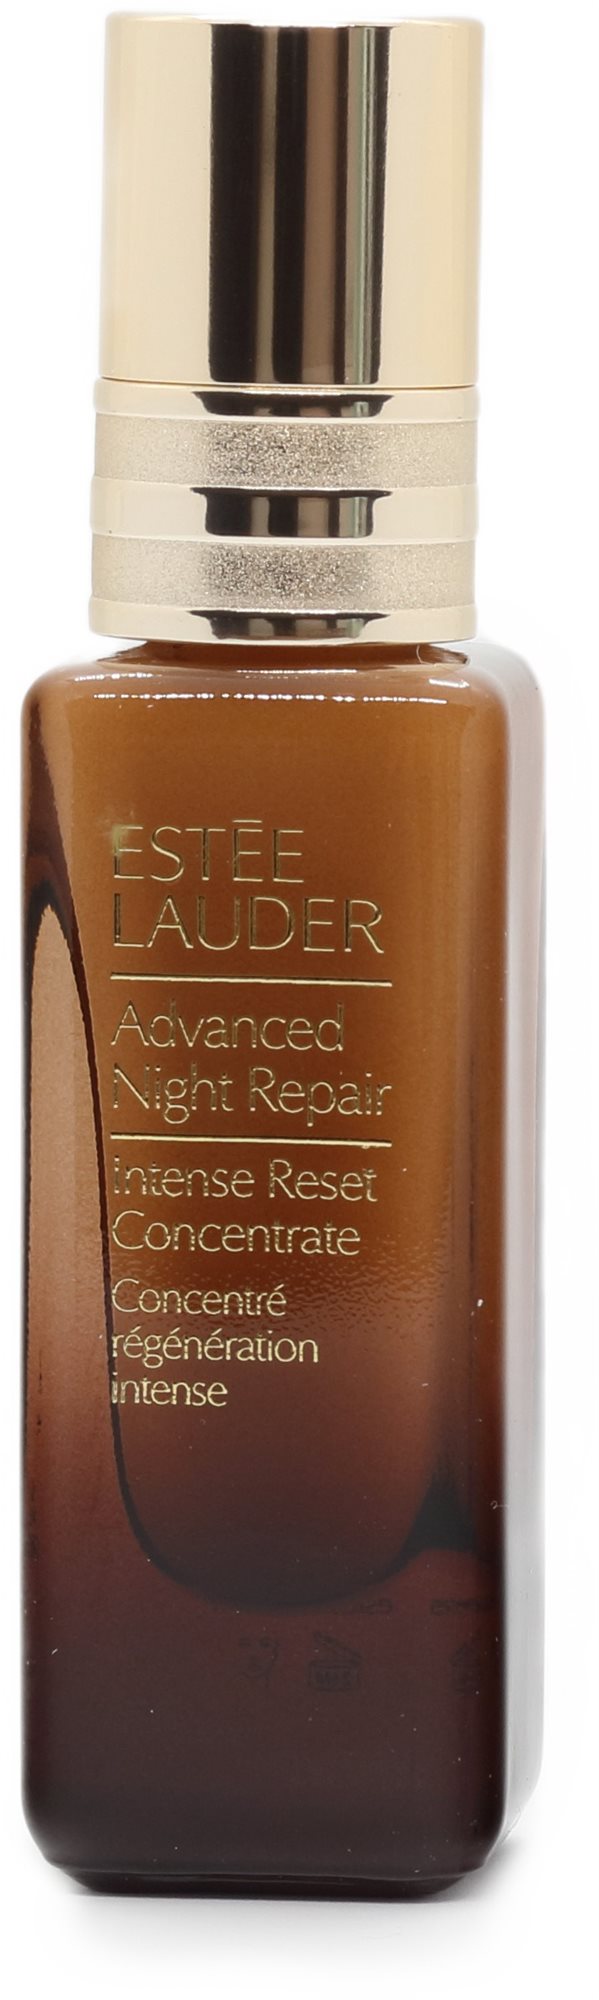 Arckrém ESTEE LAUDER Advanced Night Repair Intense Reset Concentrate 20 ml